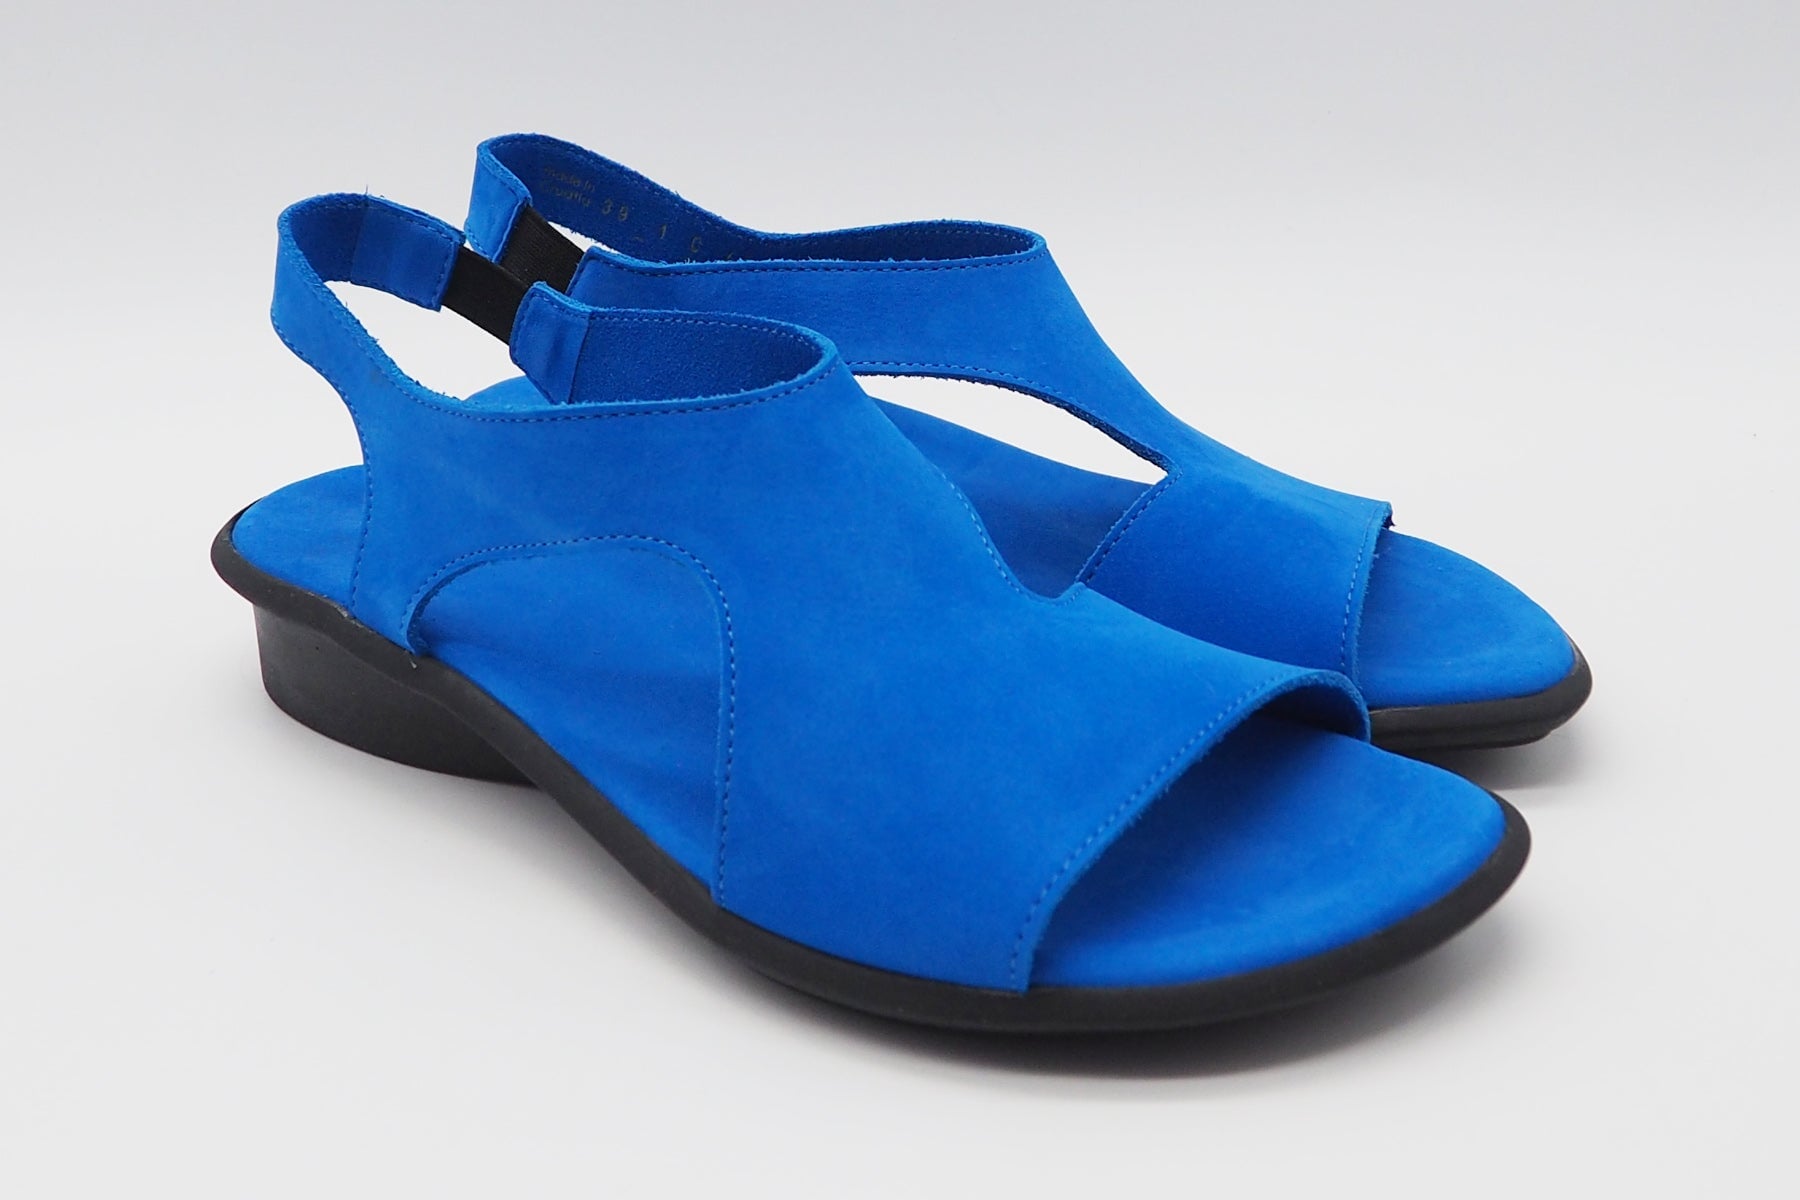 Damen Sandale aus Nubukleder in Blau - Absatz 3cm - Saoxxi Damen Sandalen Arche 